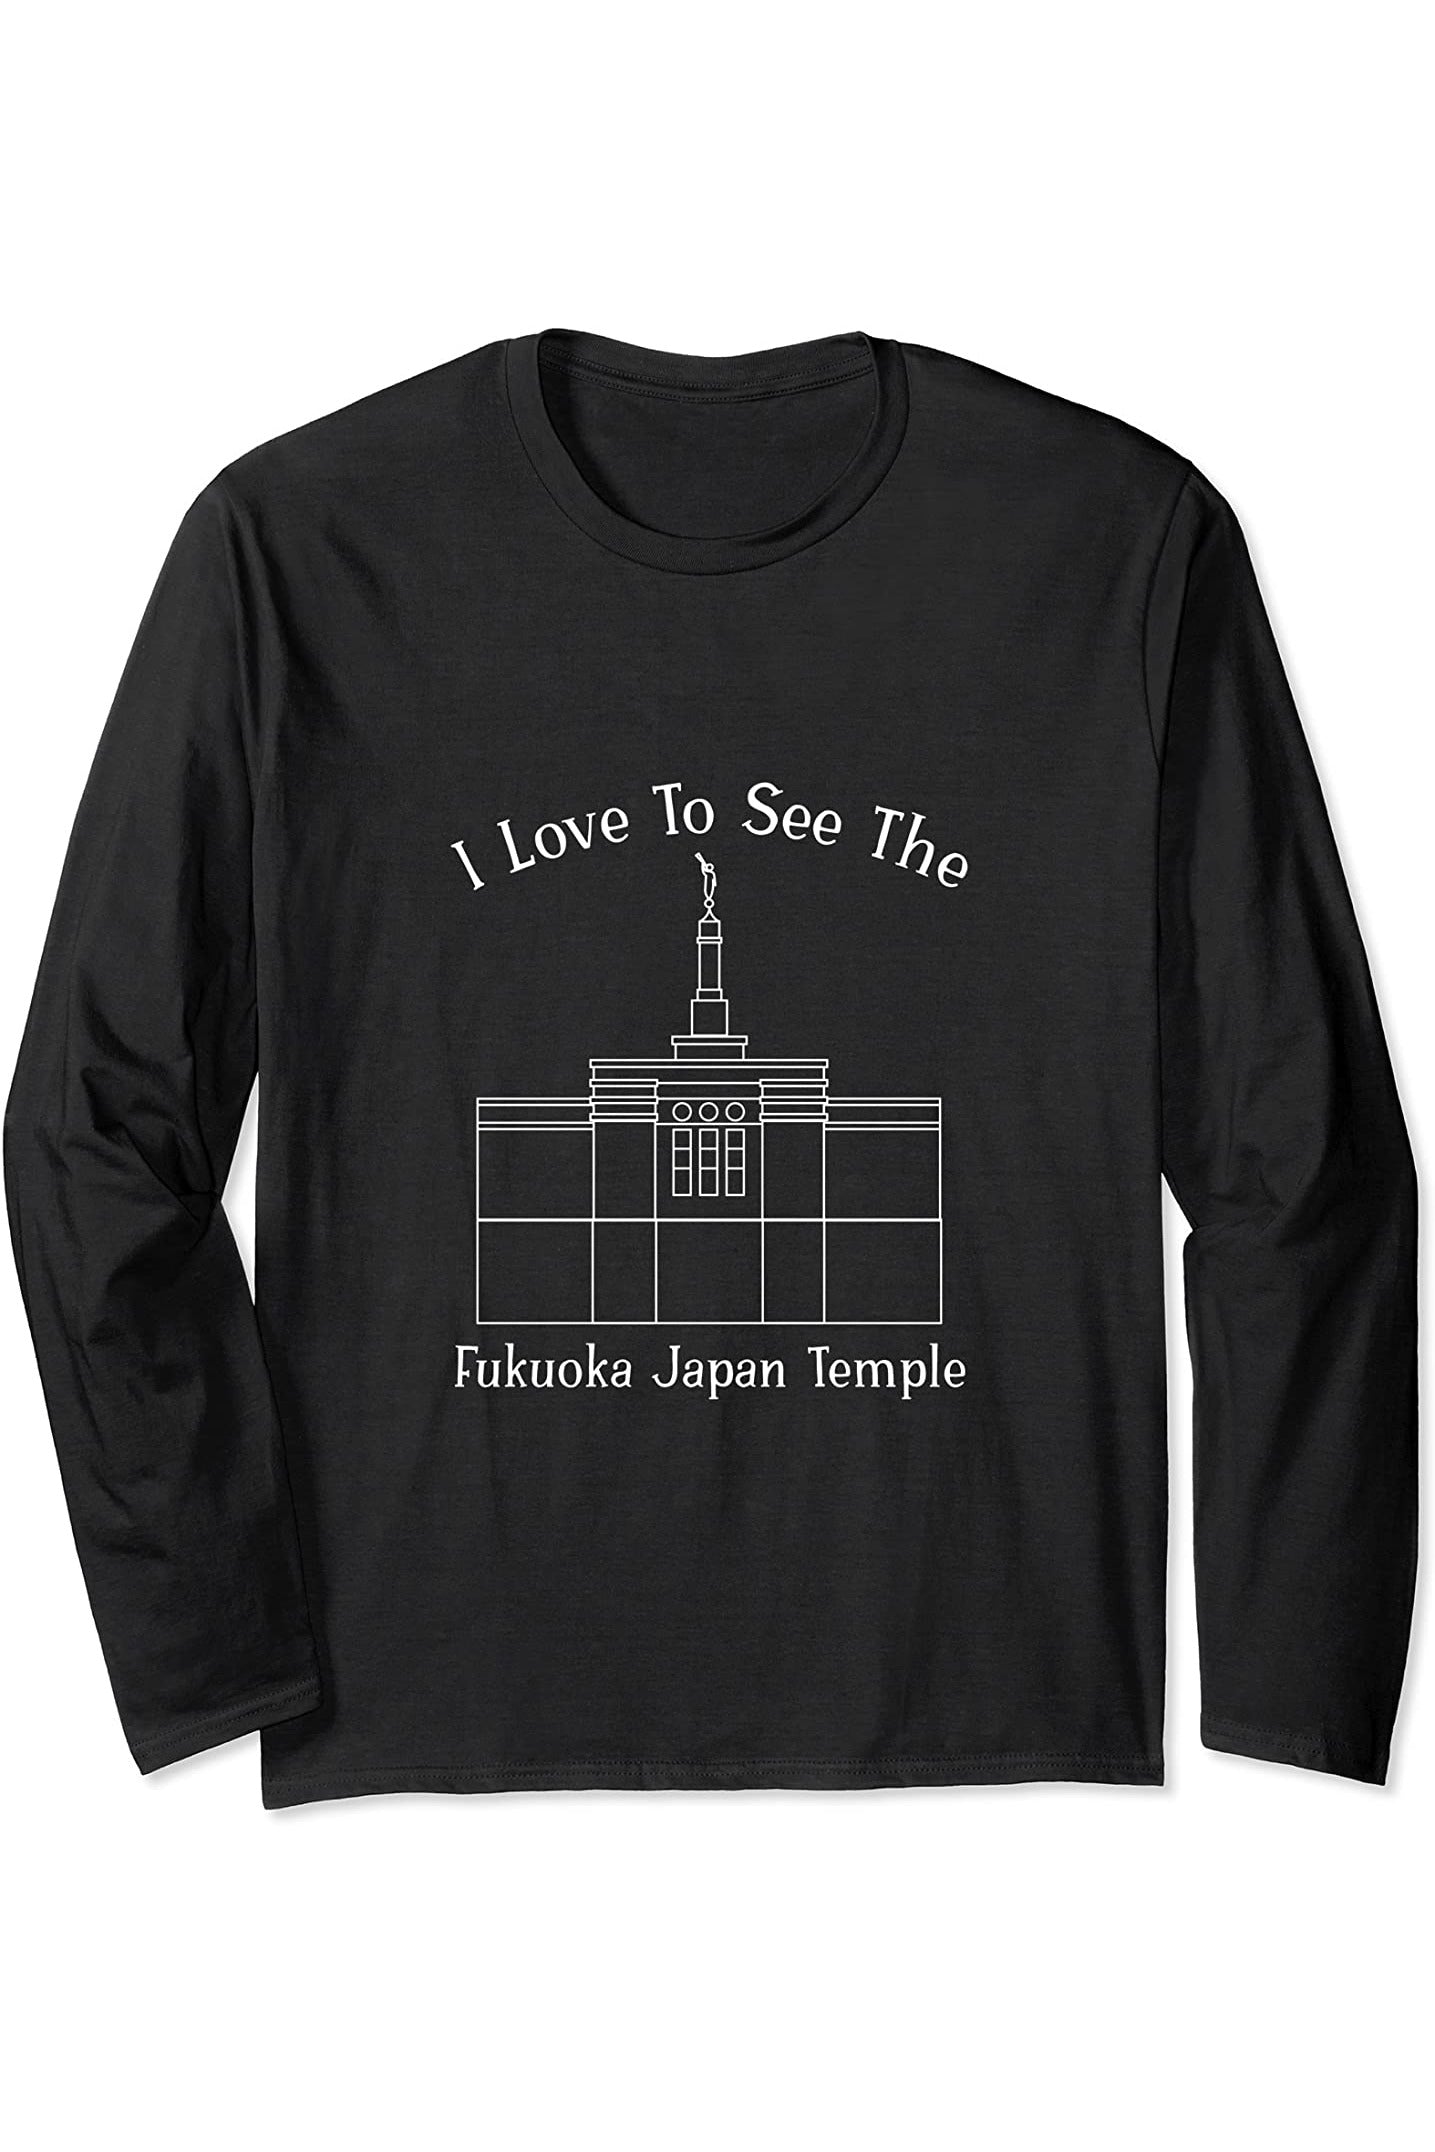 Fukuoka Japan Temple Long Sleeve T-Shirt - Happy Style (English) US